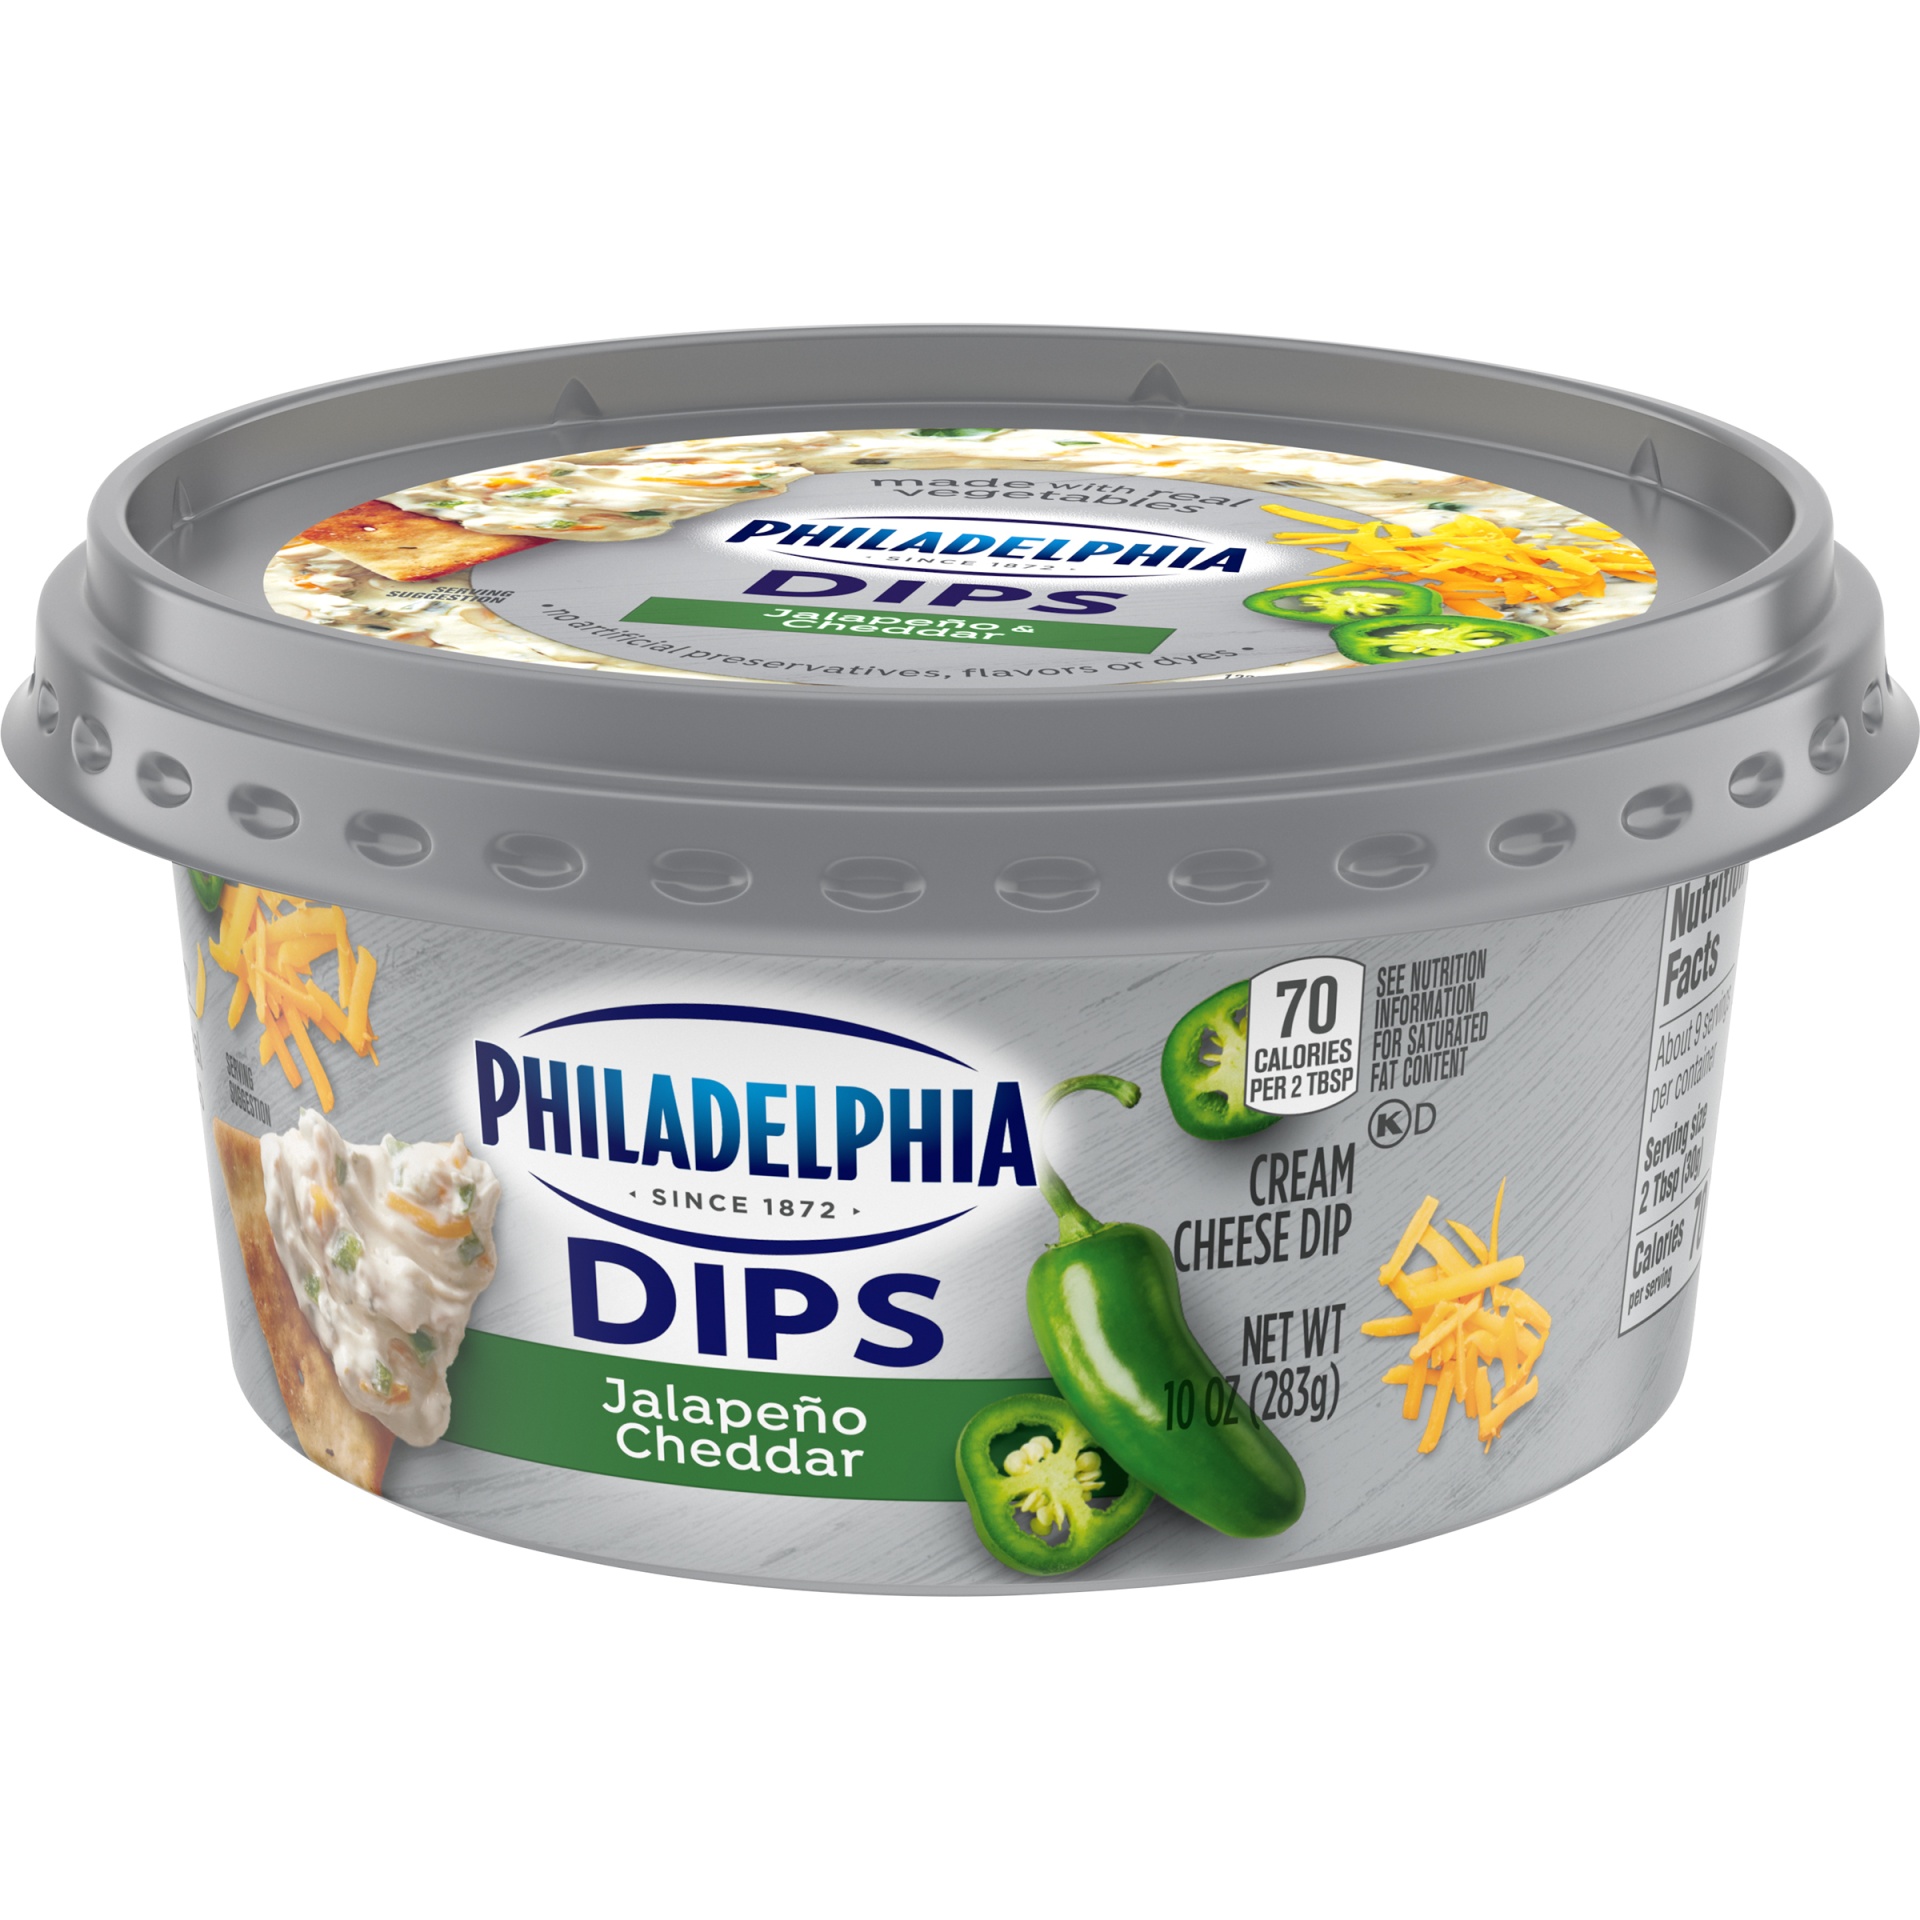 slide 11 of 14, Philadelphia Dips Jalapeno Cheddar Cream Cheese Dip, 10 oz